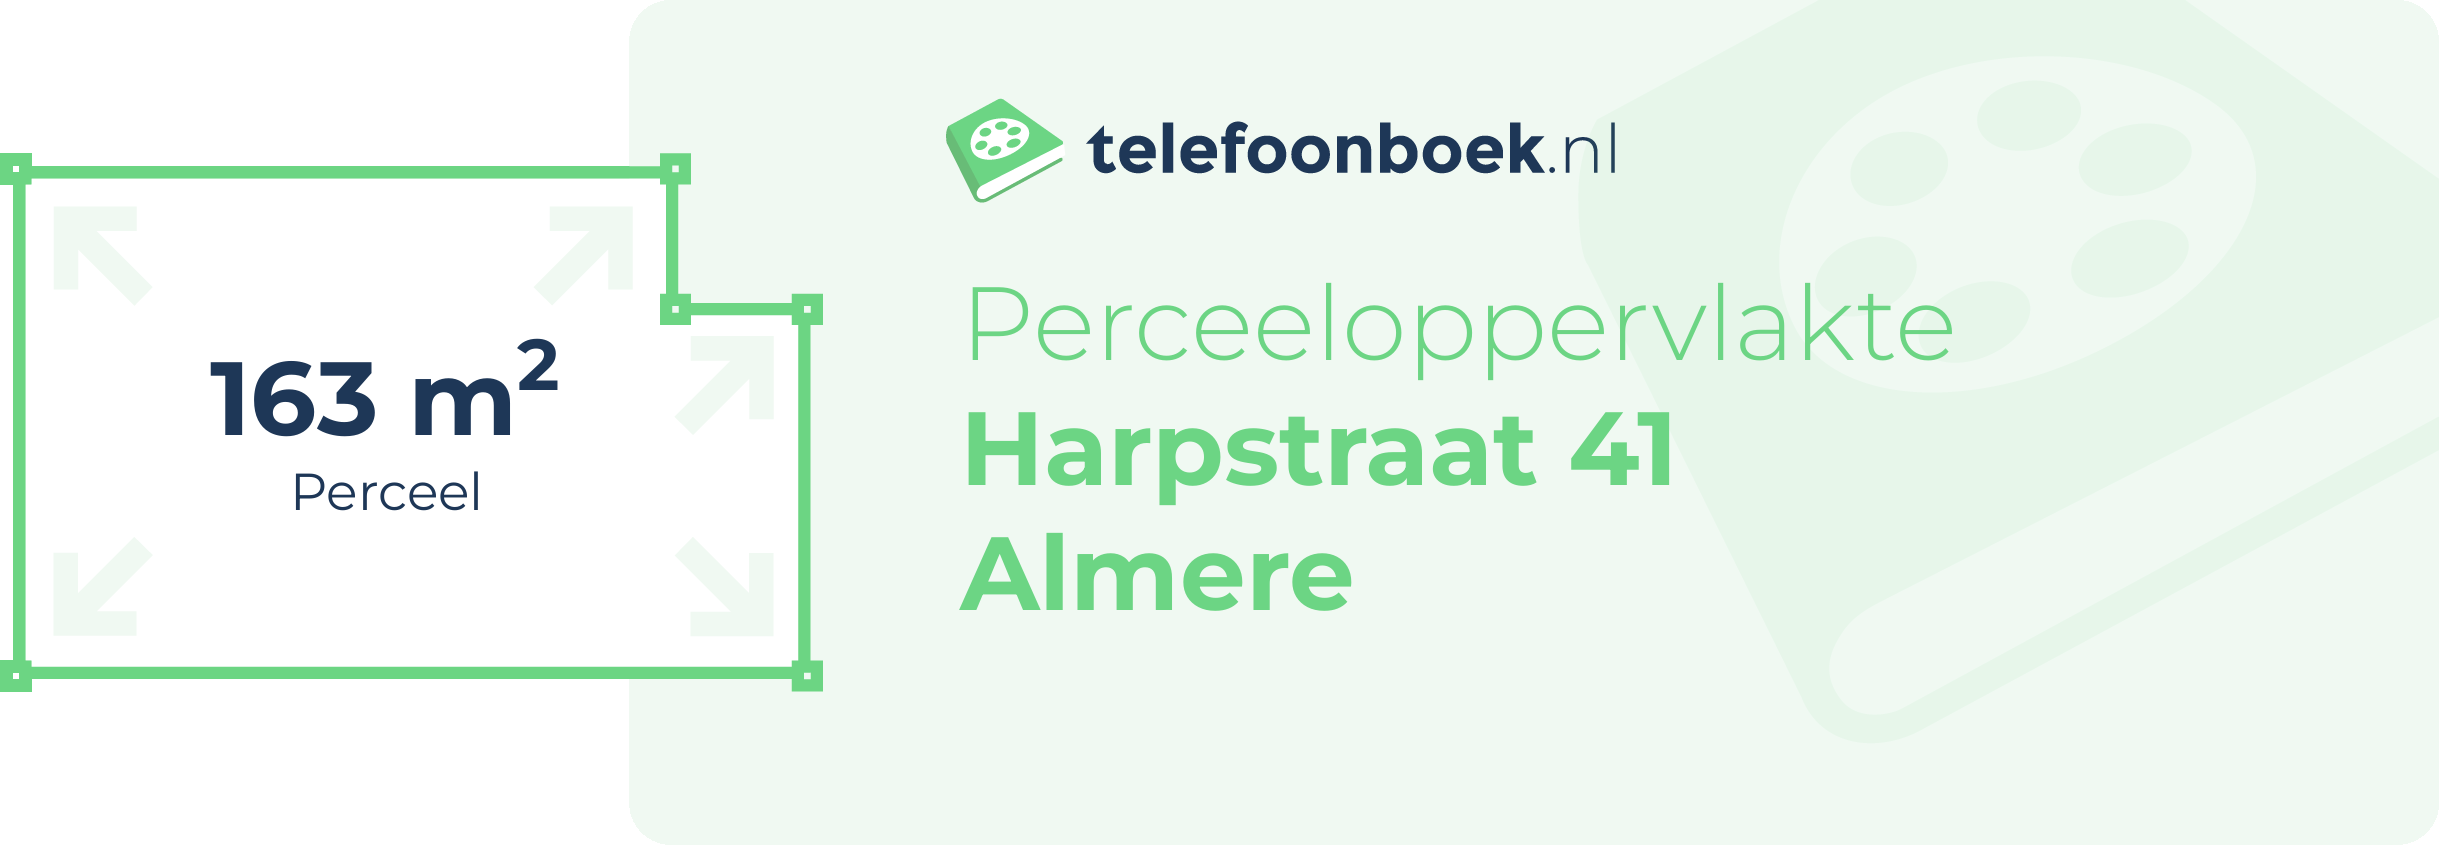 Perceeloppervlakte Harpstraat 41 Almere